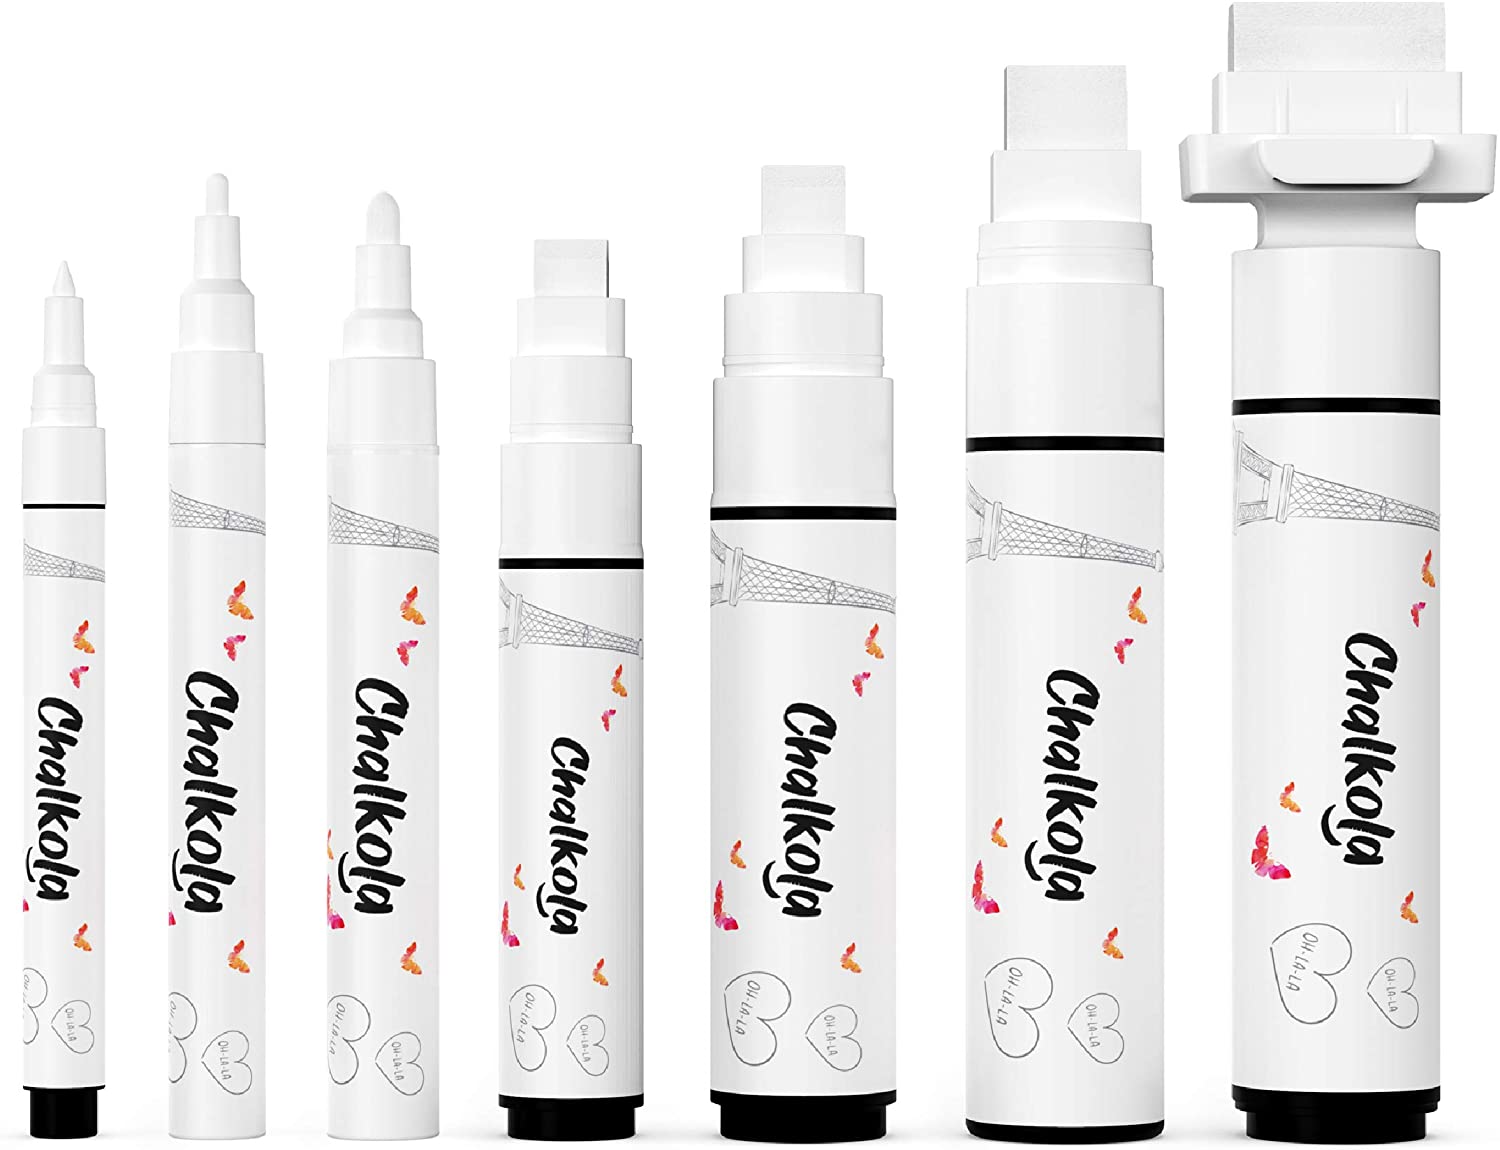 Chalkola White Chalk Markers - White Dry Erase Liquid Chalk Pens For  Chalkboard, Blackboard, Window, Bistro, Car Glass, Board, S